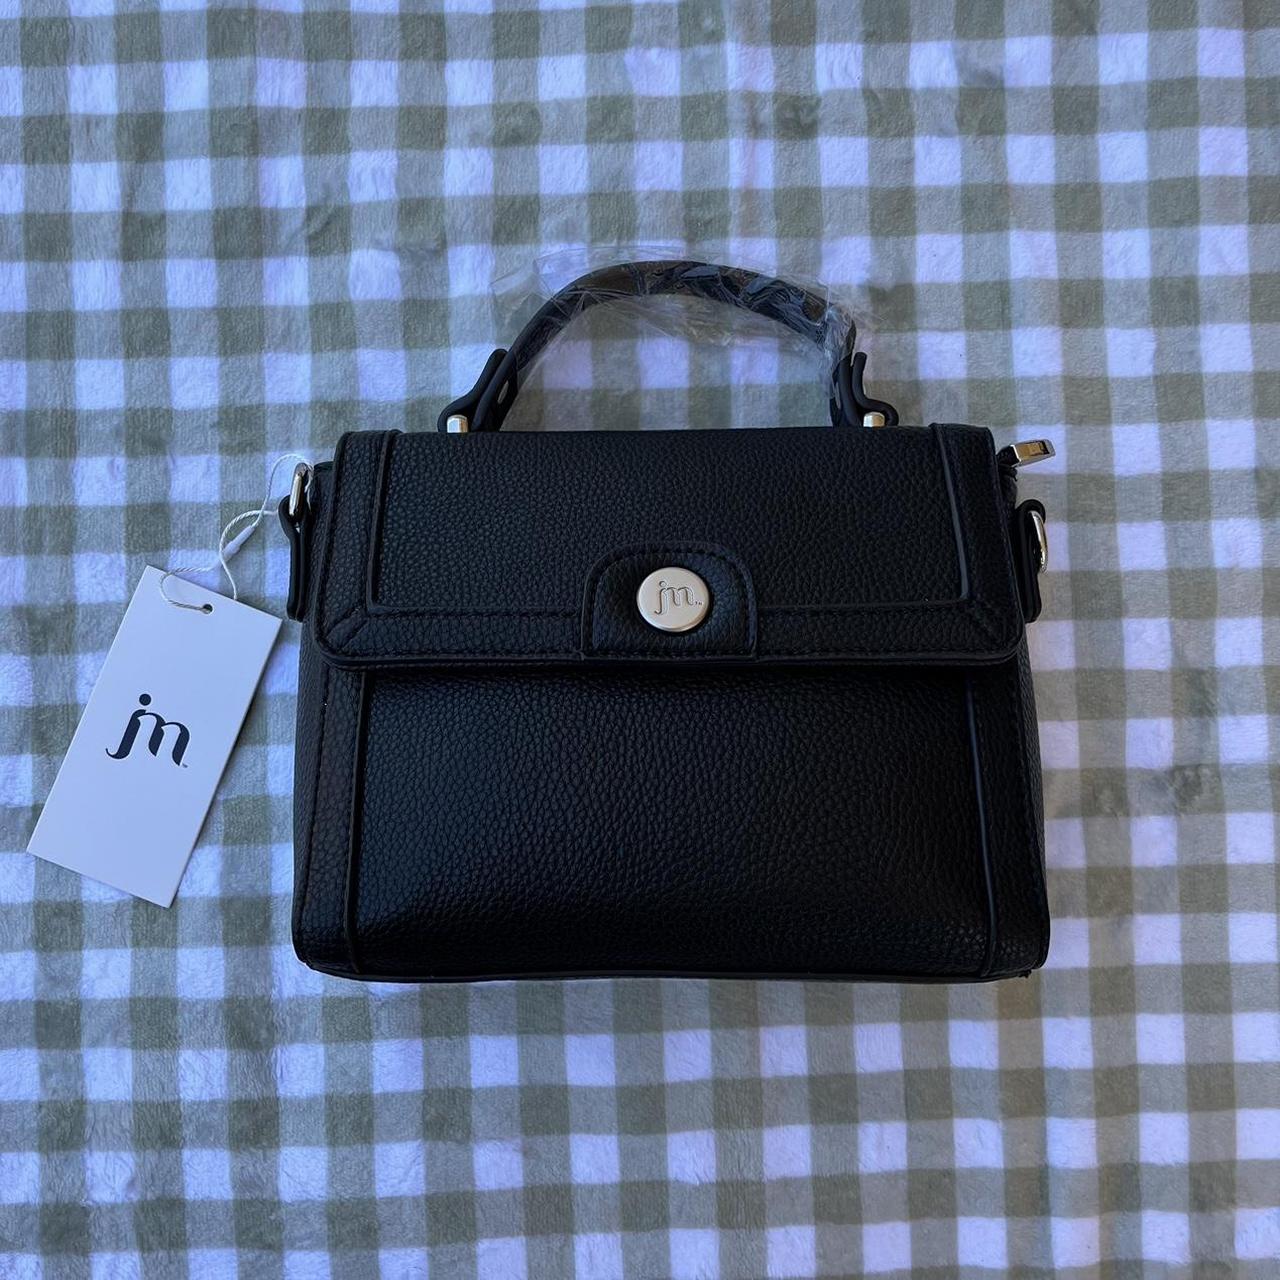 Jessica Moore Backpack purse Black pebbled faux - Depop